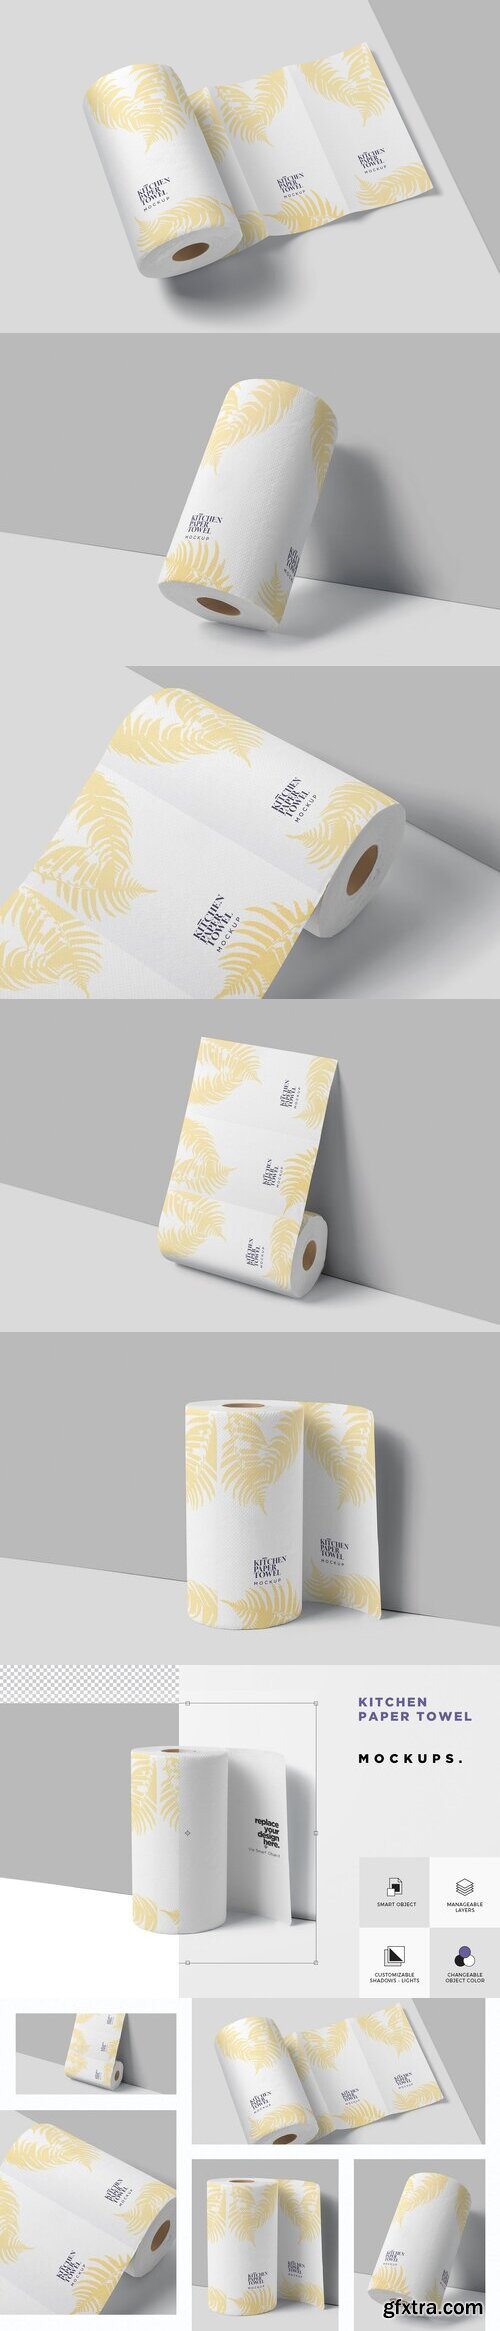 CreativeMarket - Kitchen Paper Towel Mockups 7540191